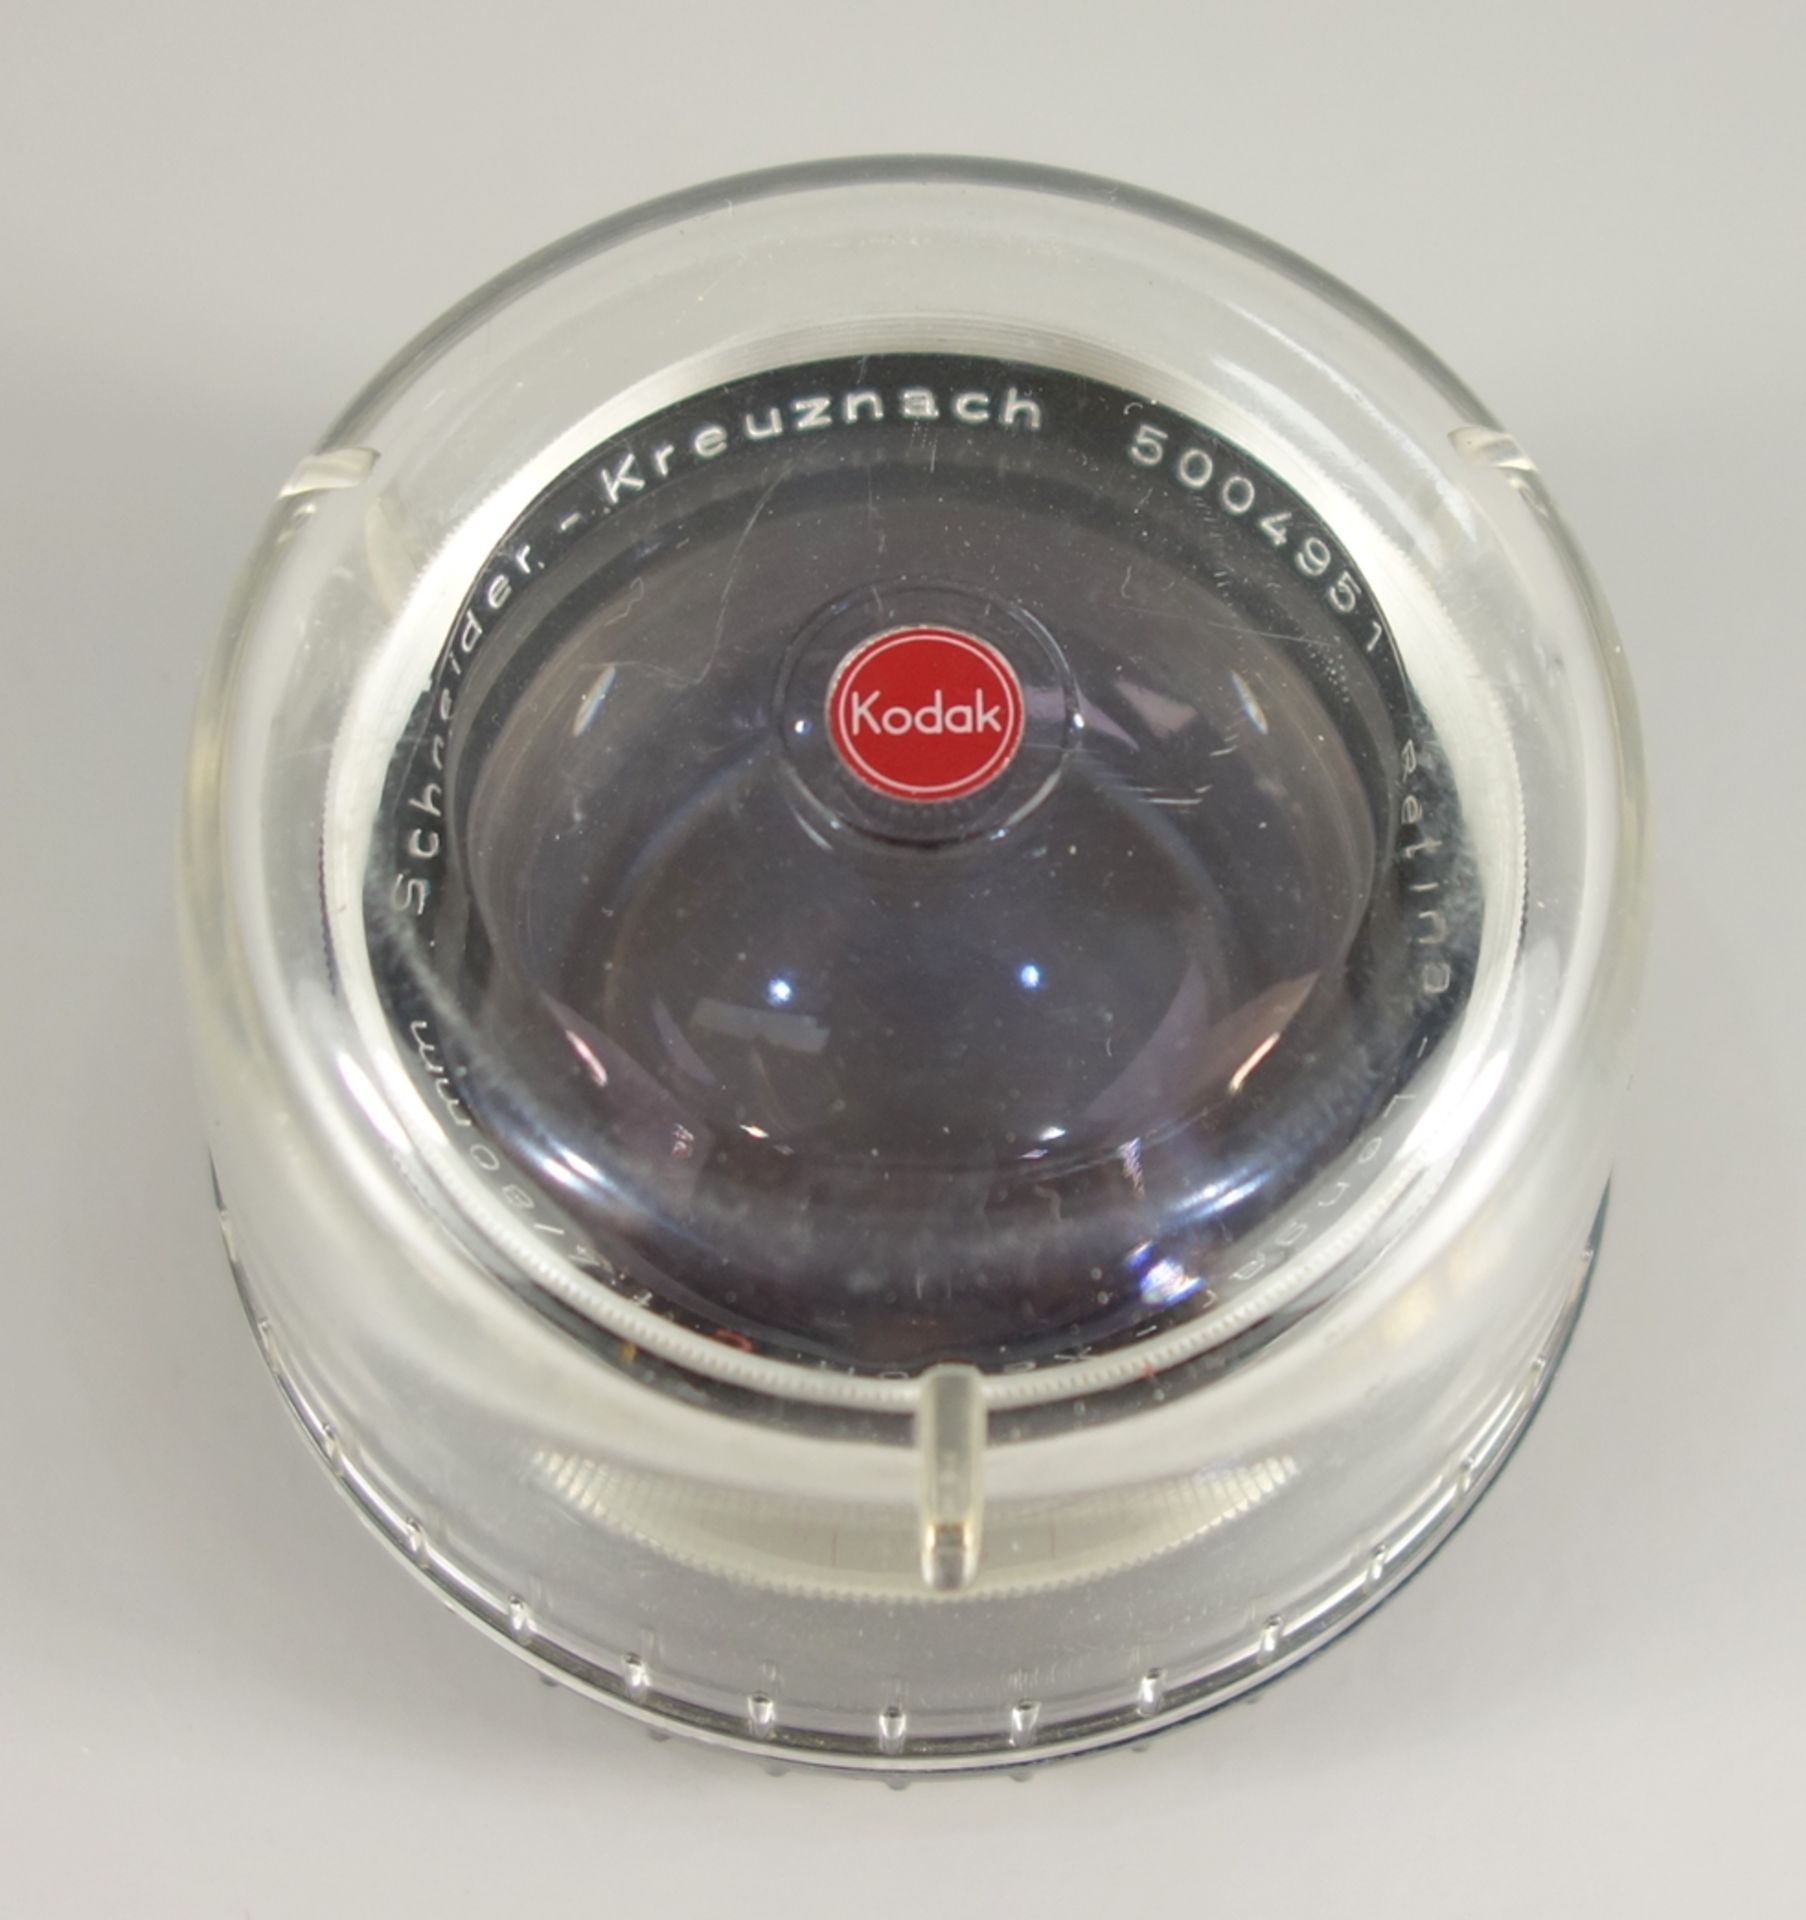 Tele-Objektiv für Kodak Retina, Schneider-Kreuznach Retina Longar-Xenon C 1:4/80 mm, 1954-60, - Image 3 of 4